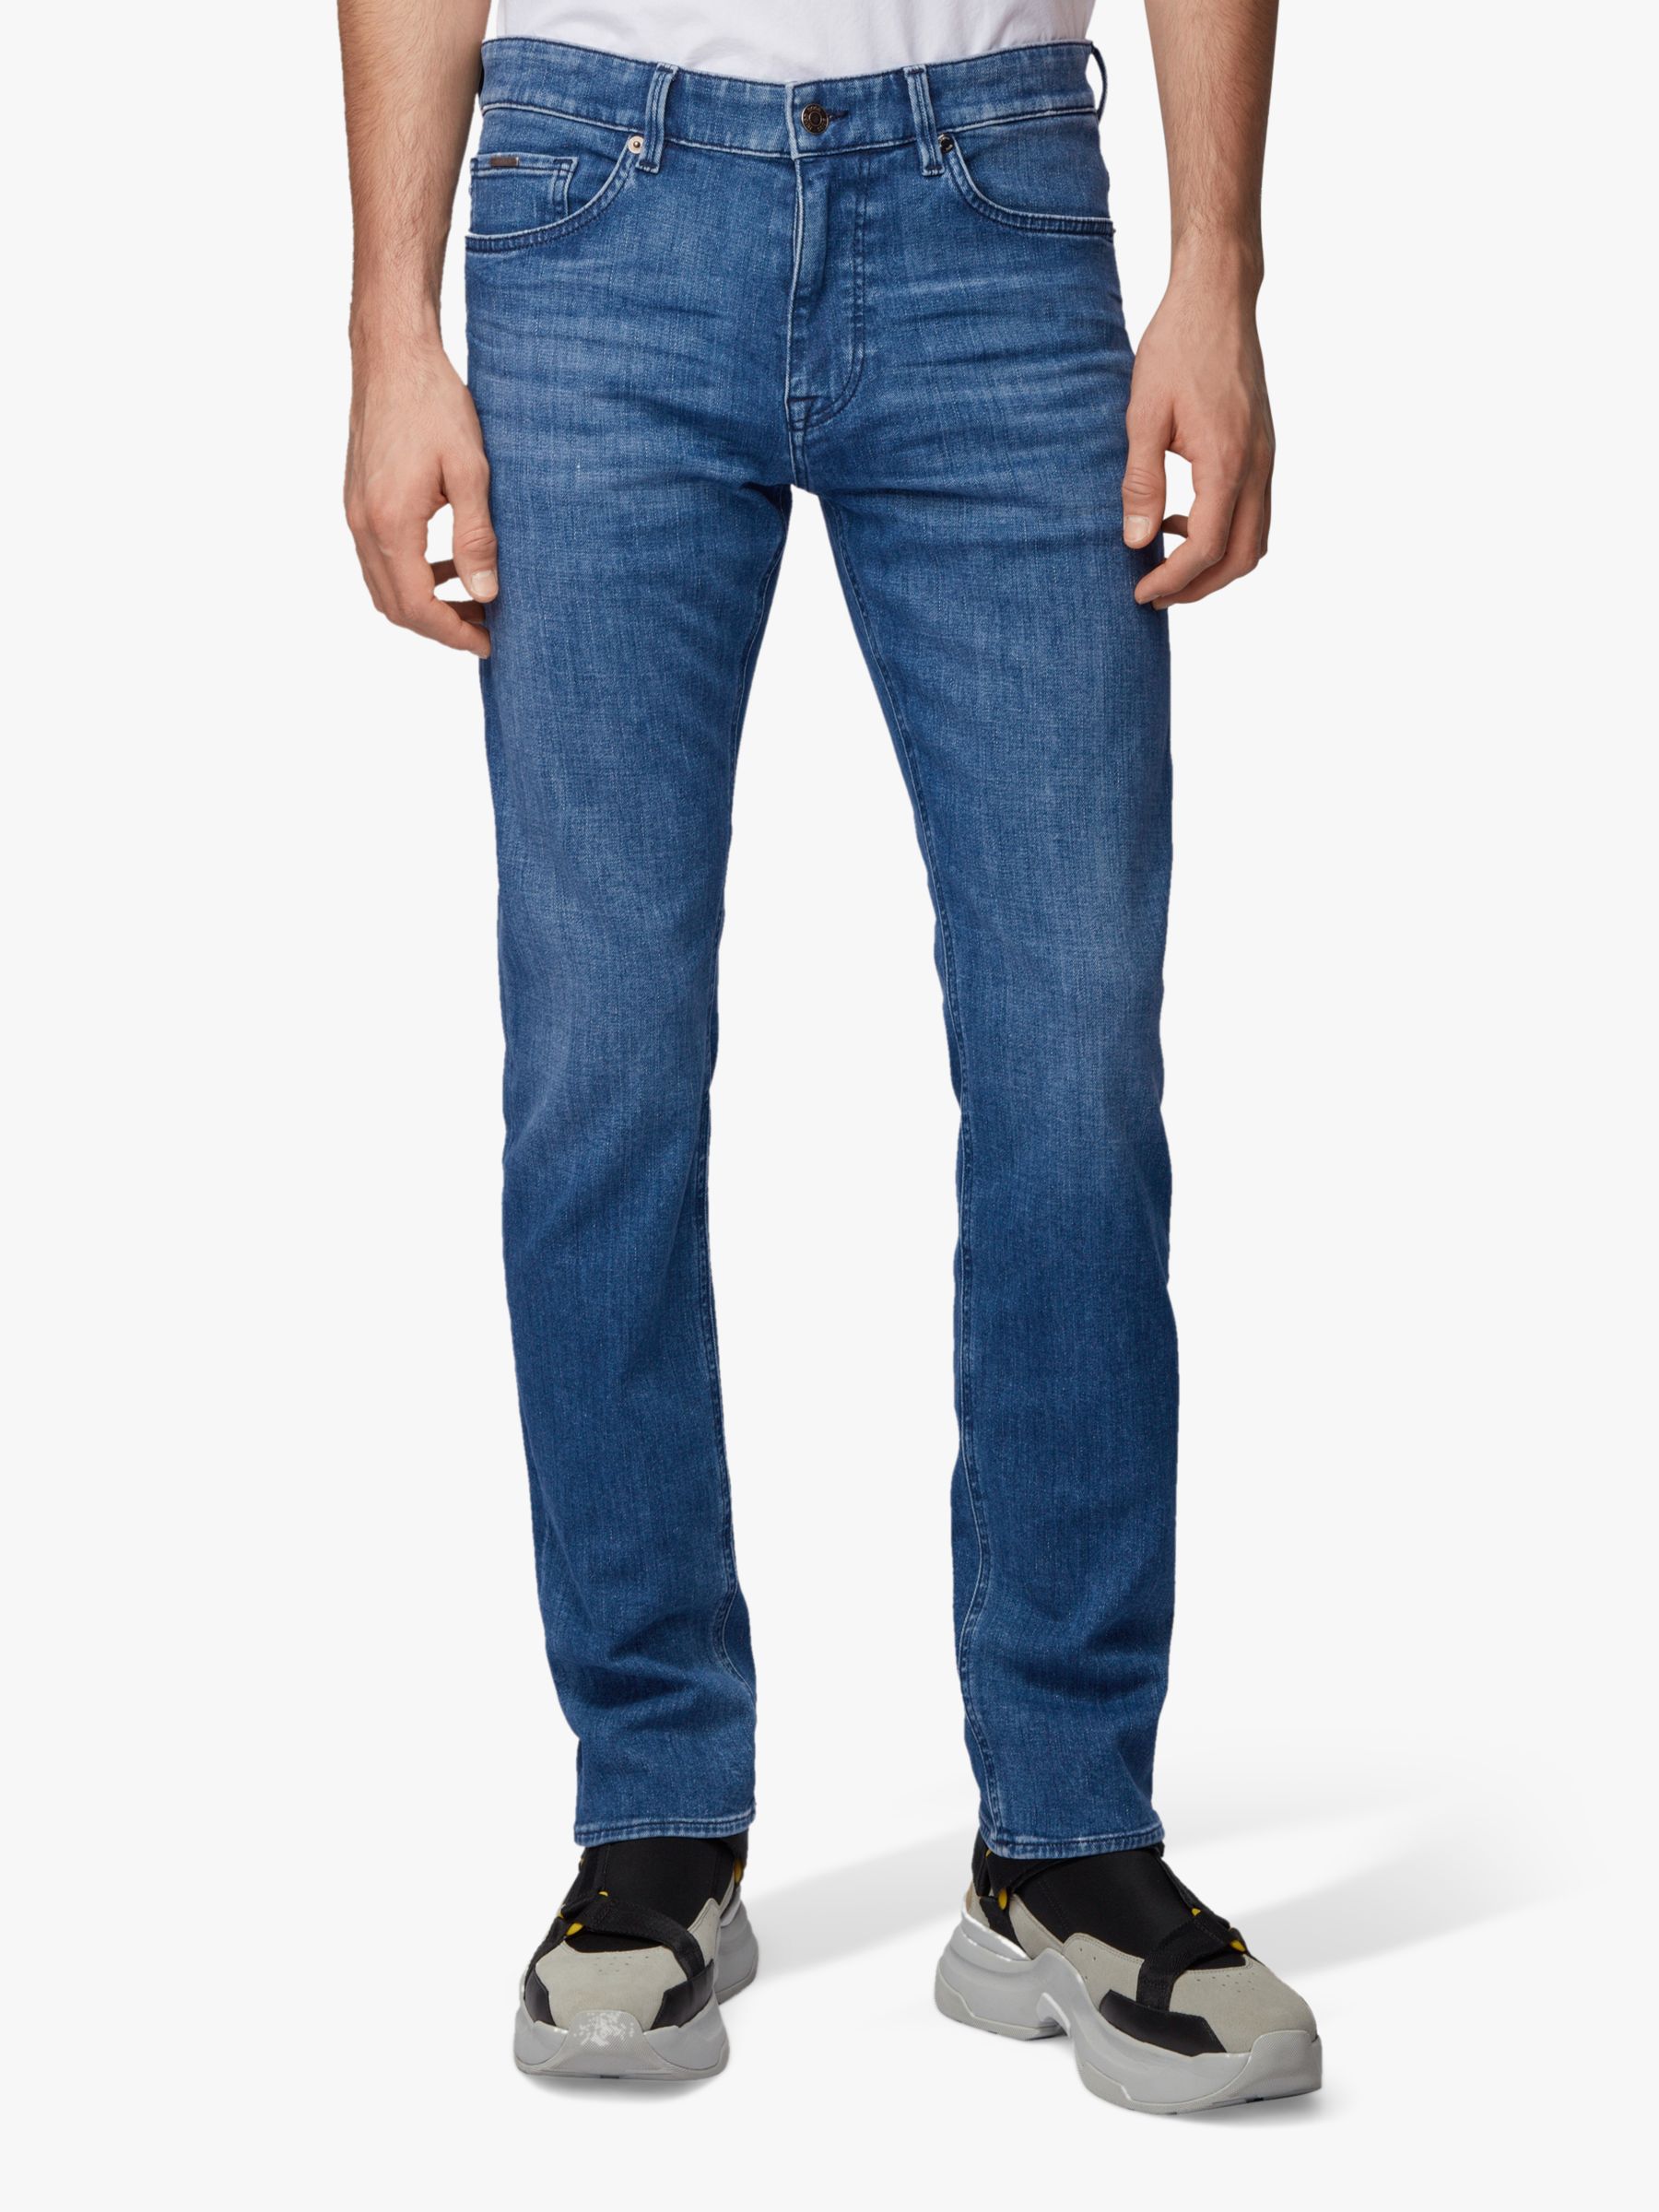 BOSS Delaware Slim Fit Jeans, Medium Blue at John Lewis & Partners